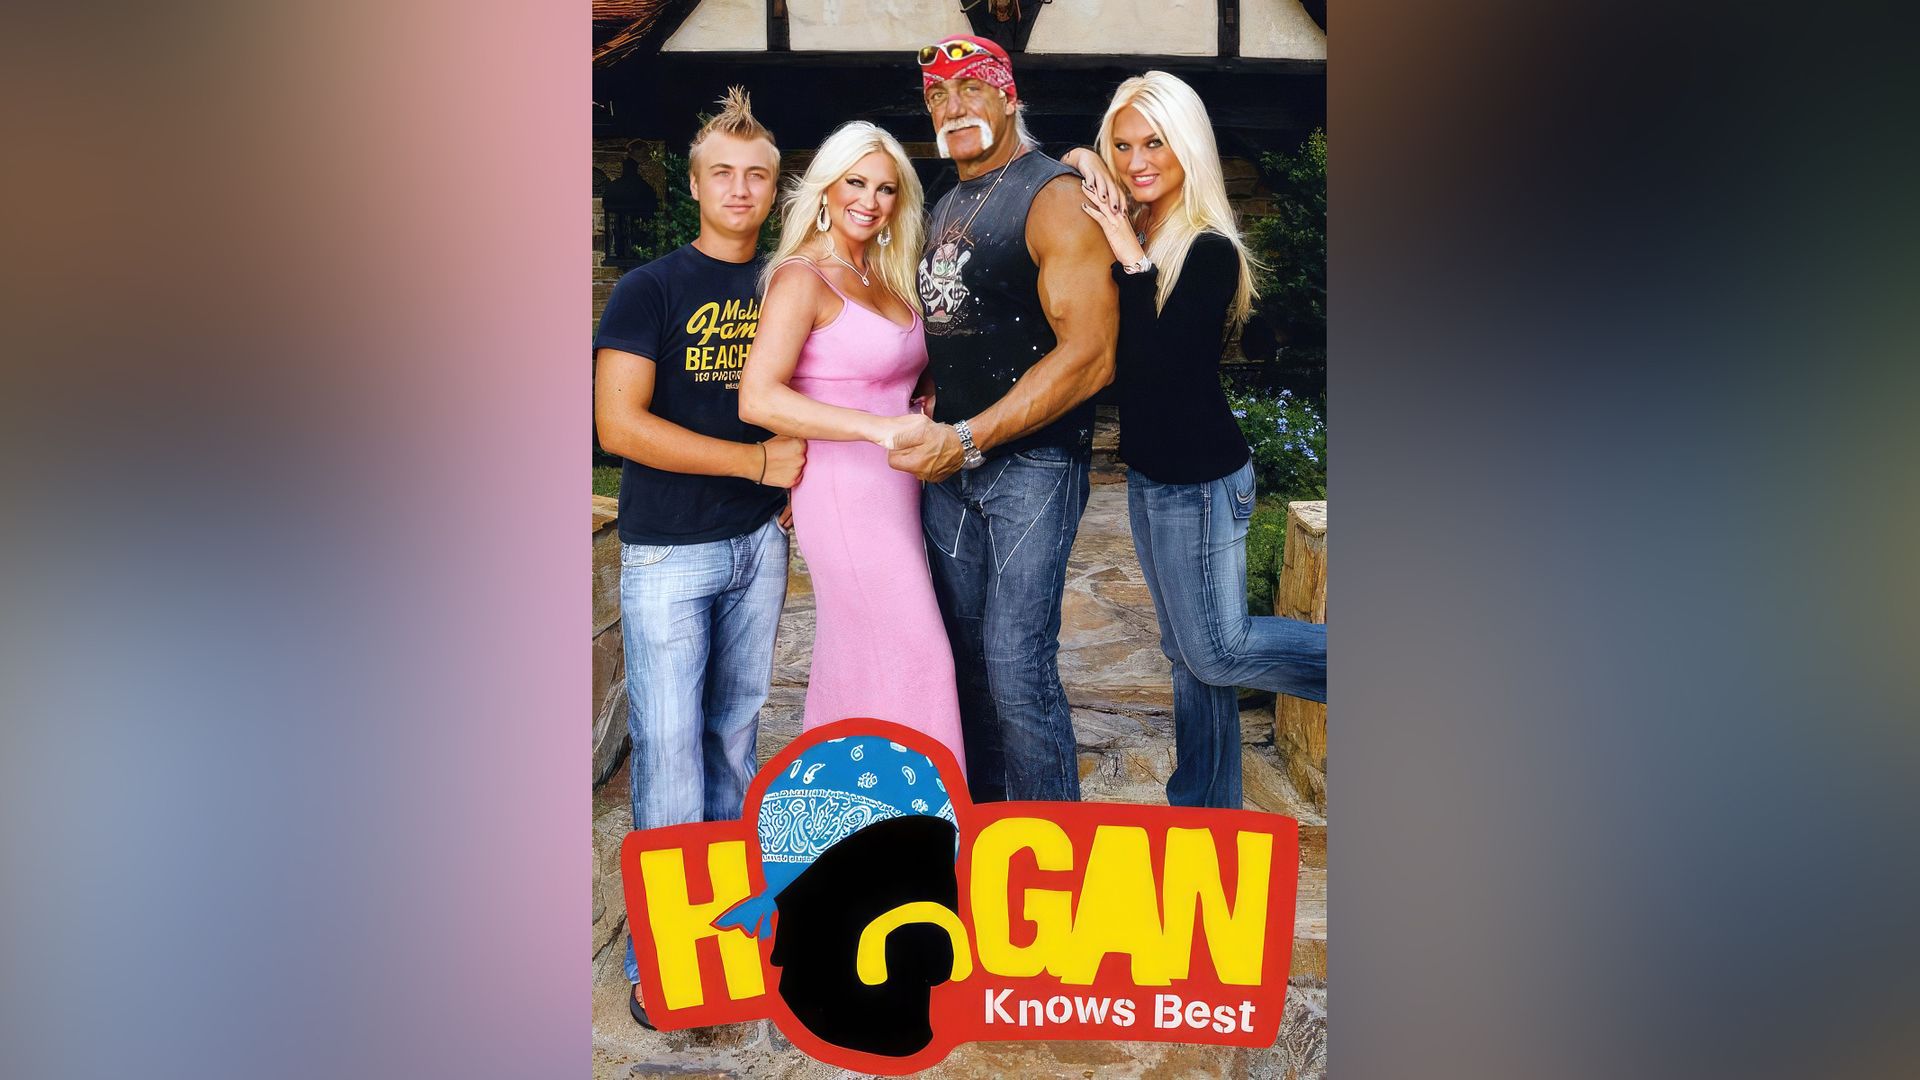 The show 'Hogan Knows Best'